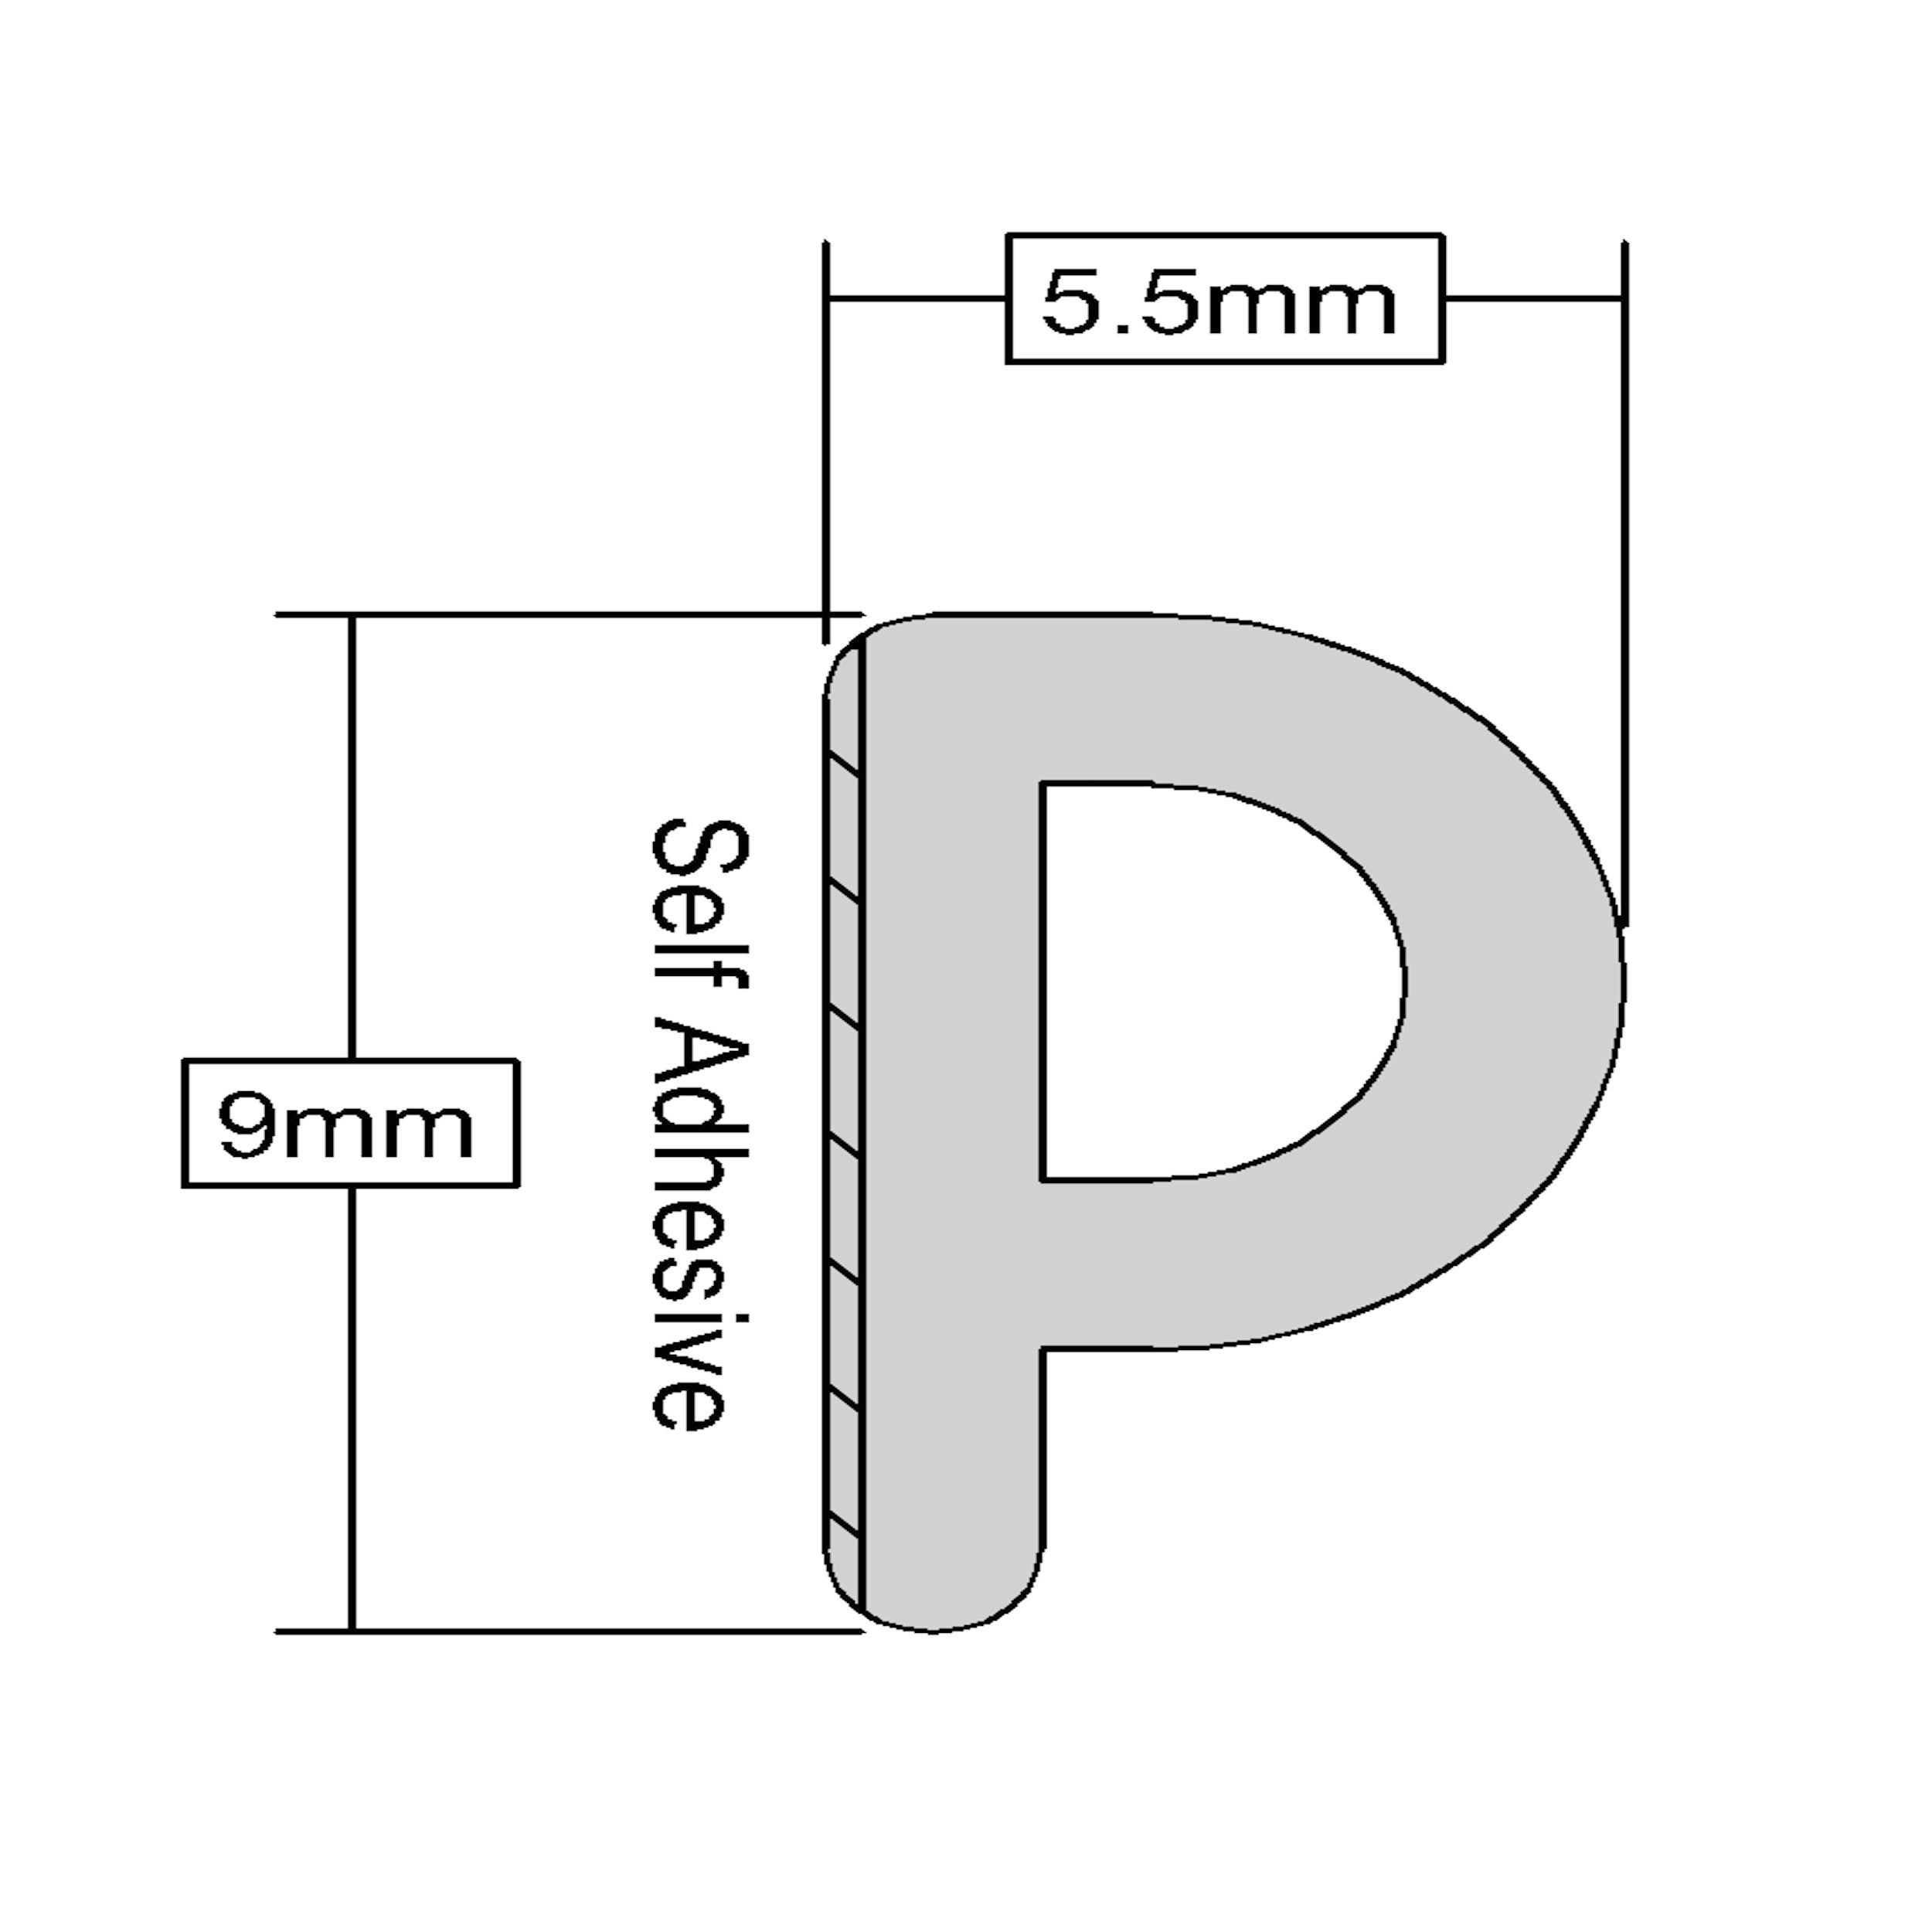 Carousel navigation image position 2 of 3